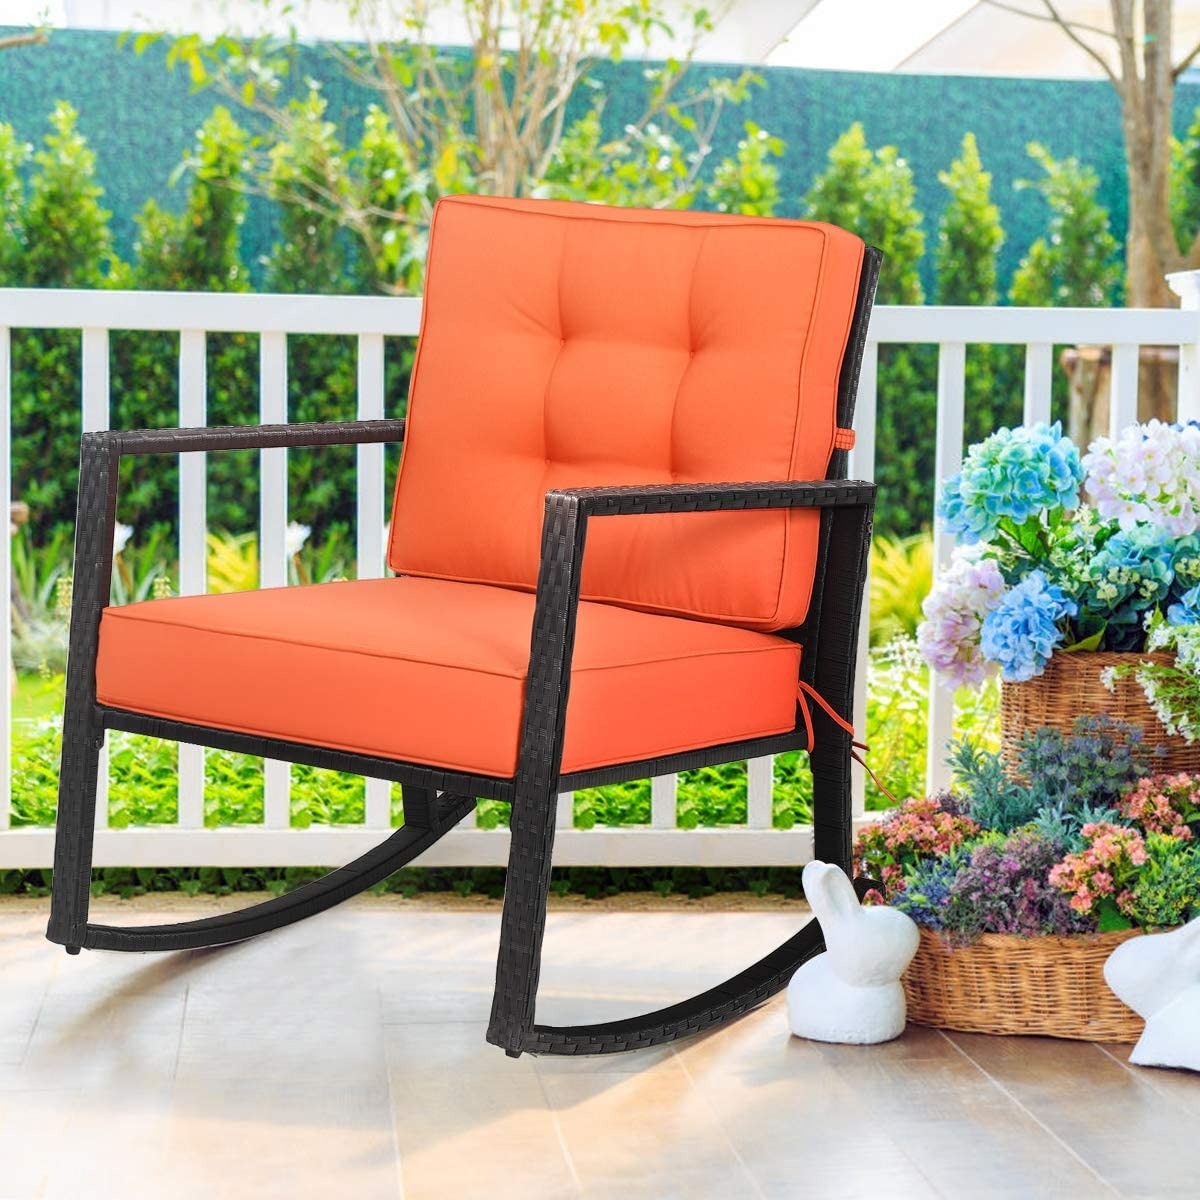 Tangkula Outdoor Glider Rattan Rocker Chair w/ 5" Thick Cushion(Orange) $76.99+Free Shipping $77